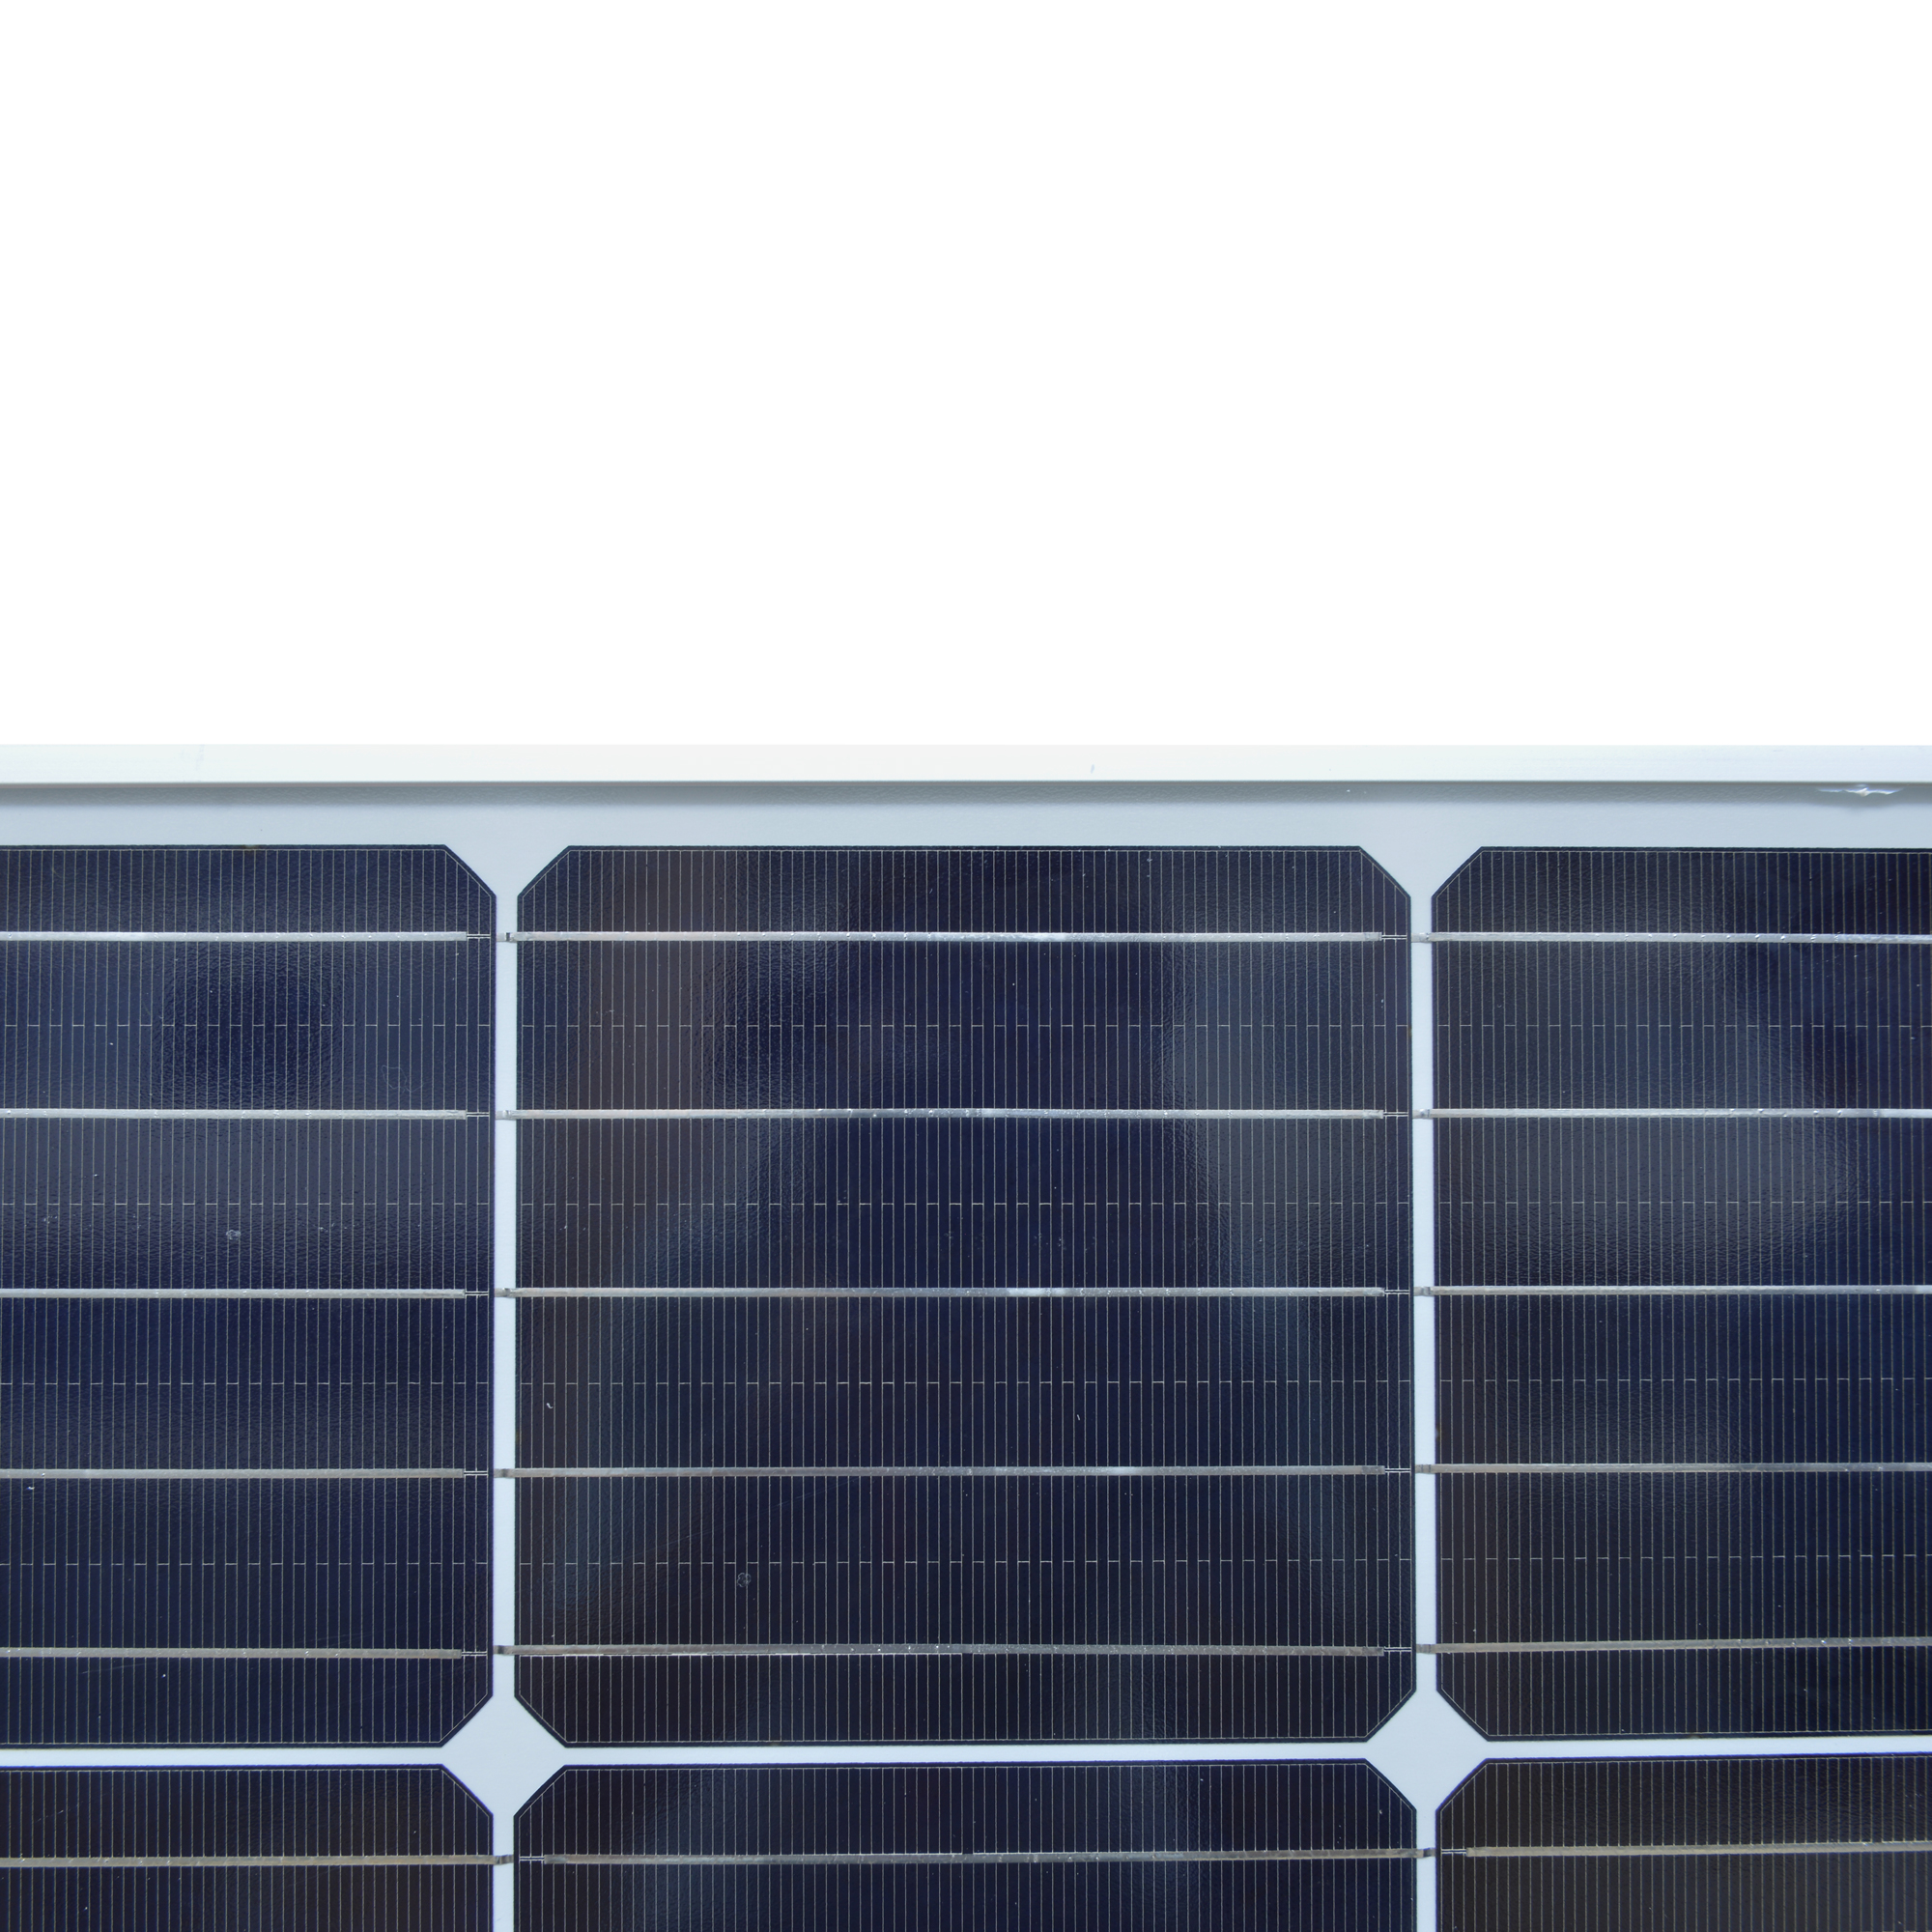 off-grid 330w monocrystalline perc solar panel kit for home